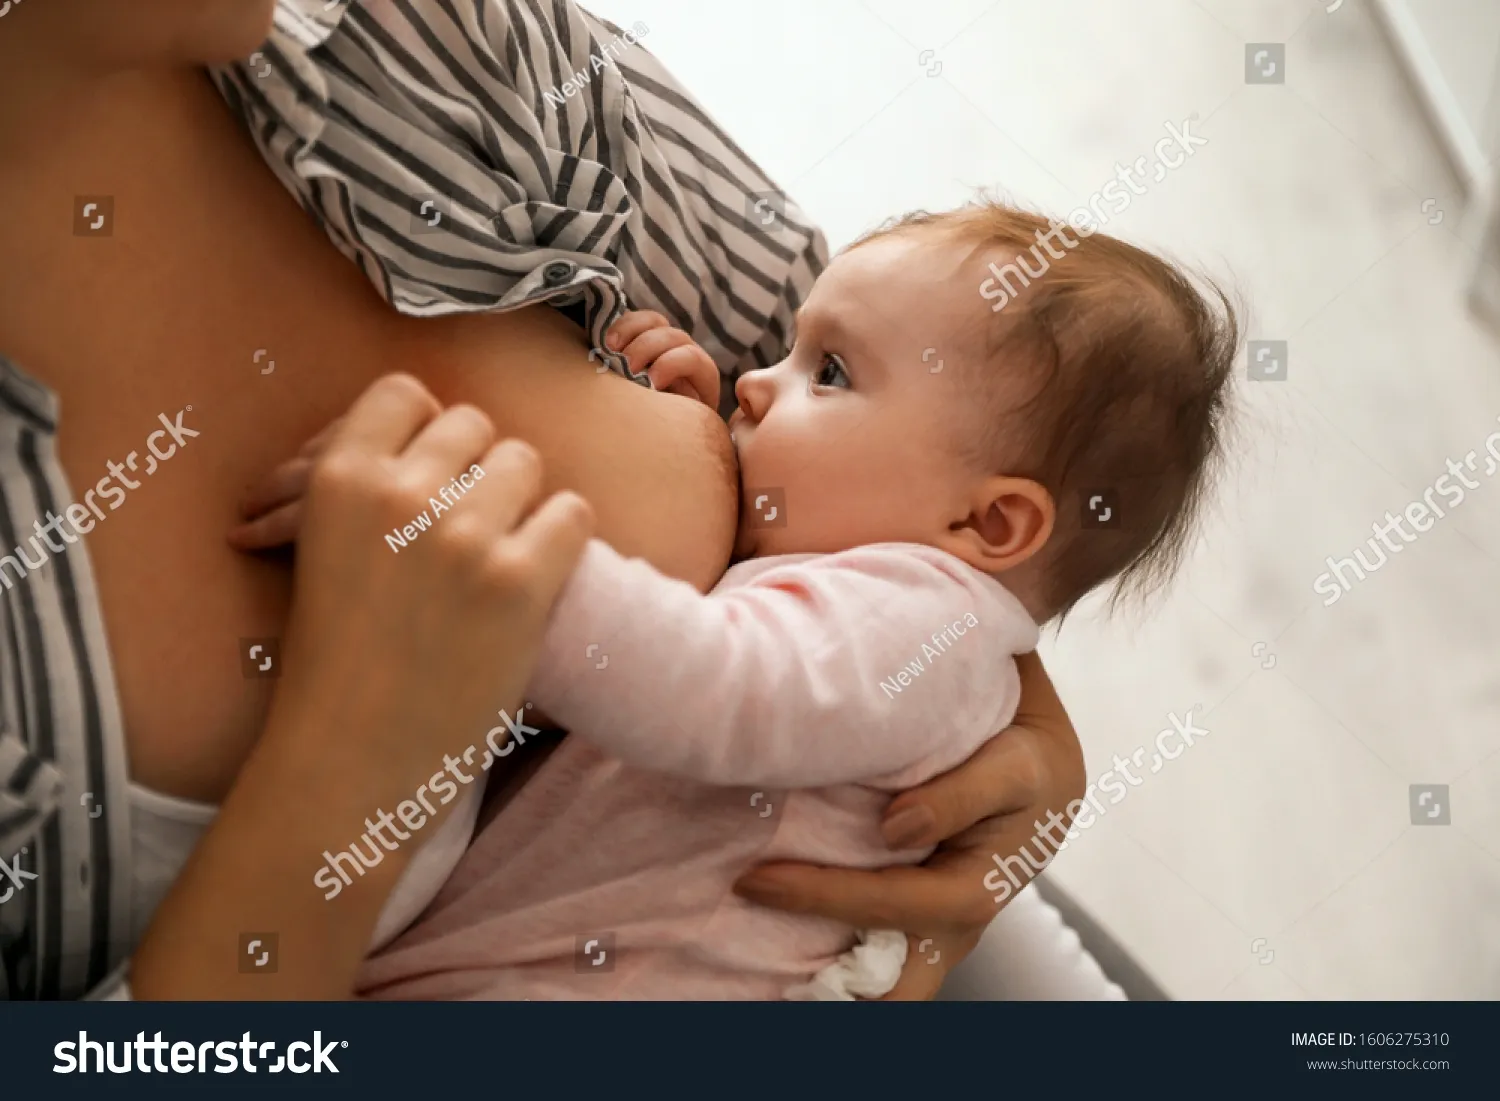 Голая женщина кормит ребенка